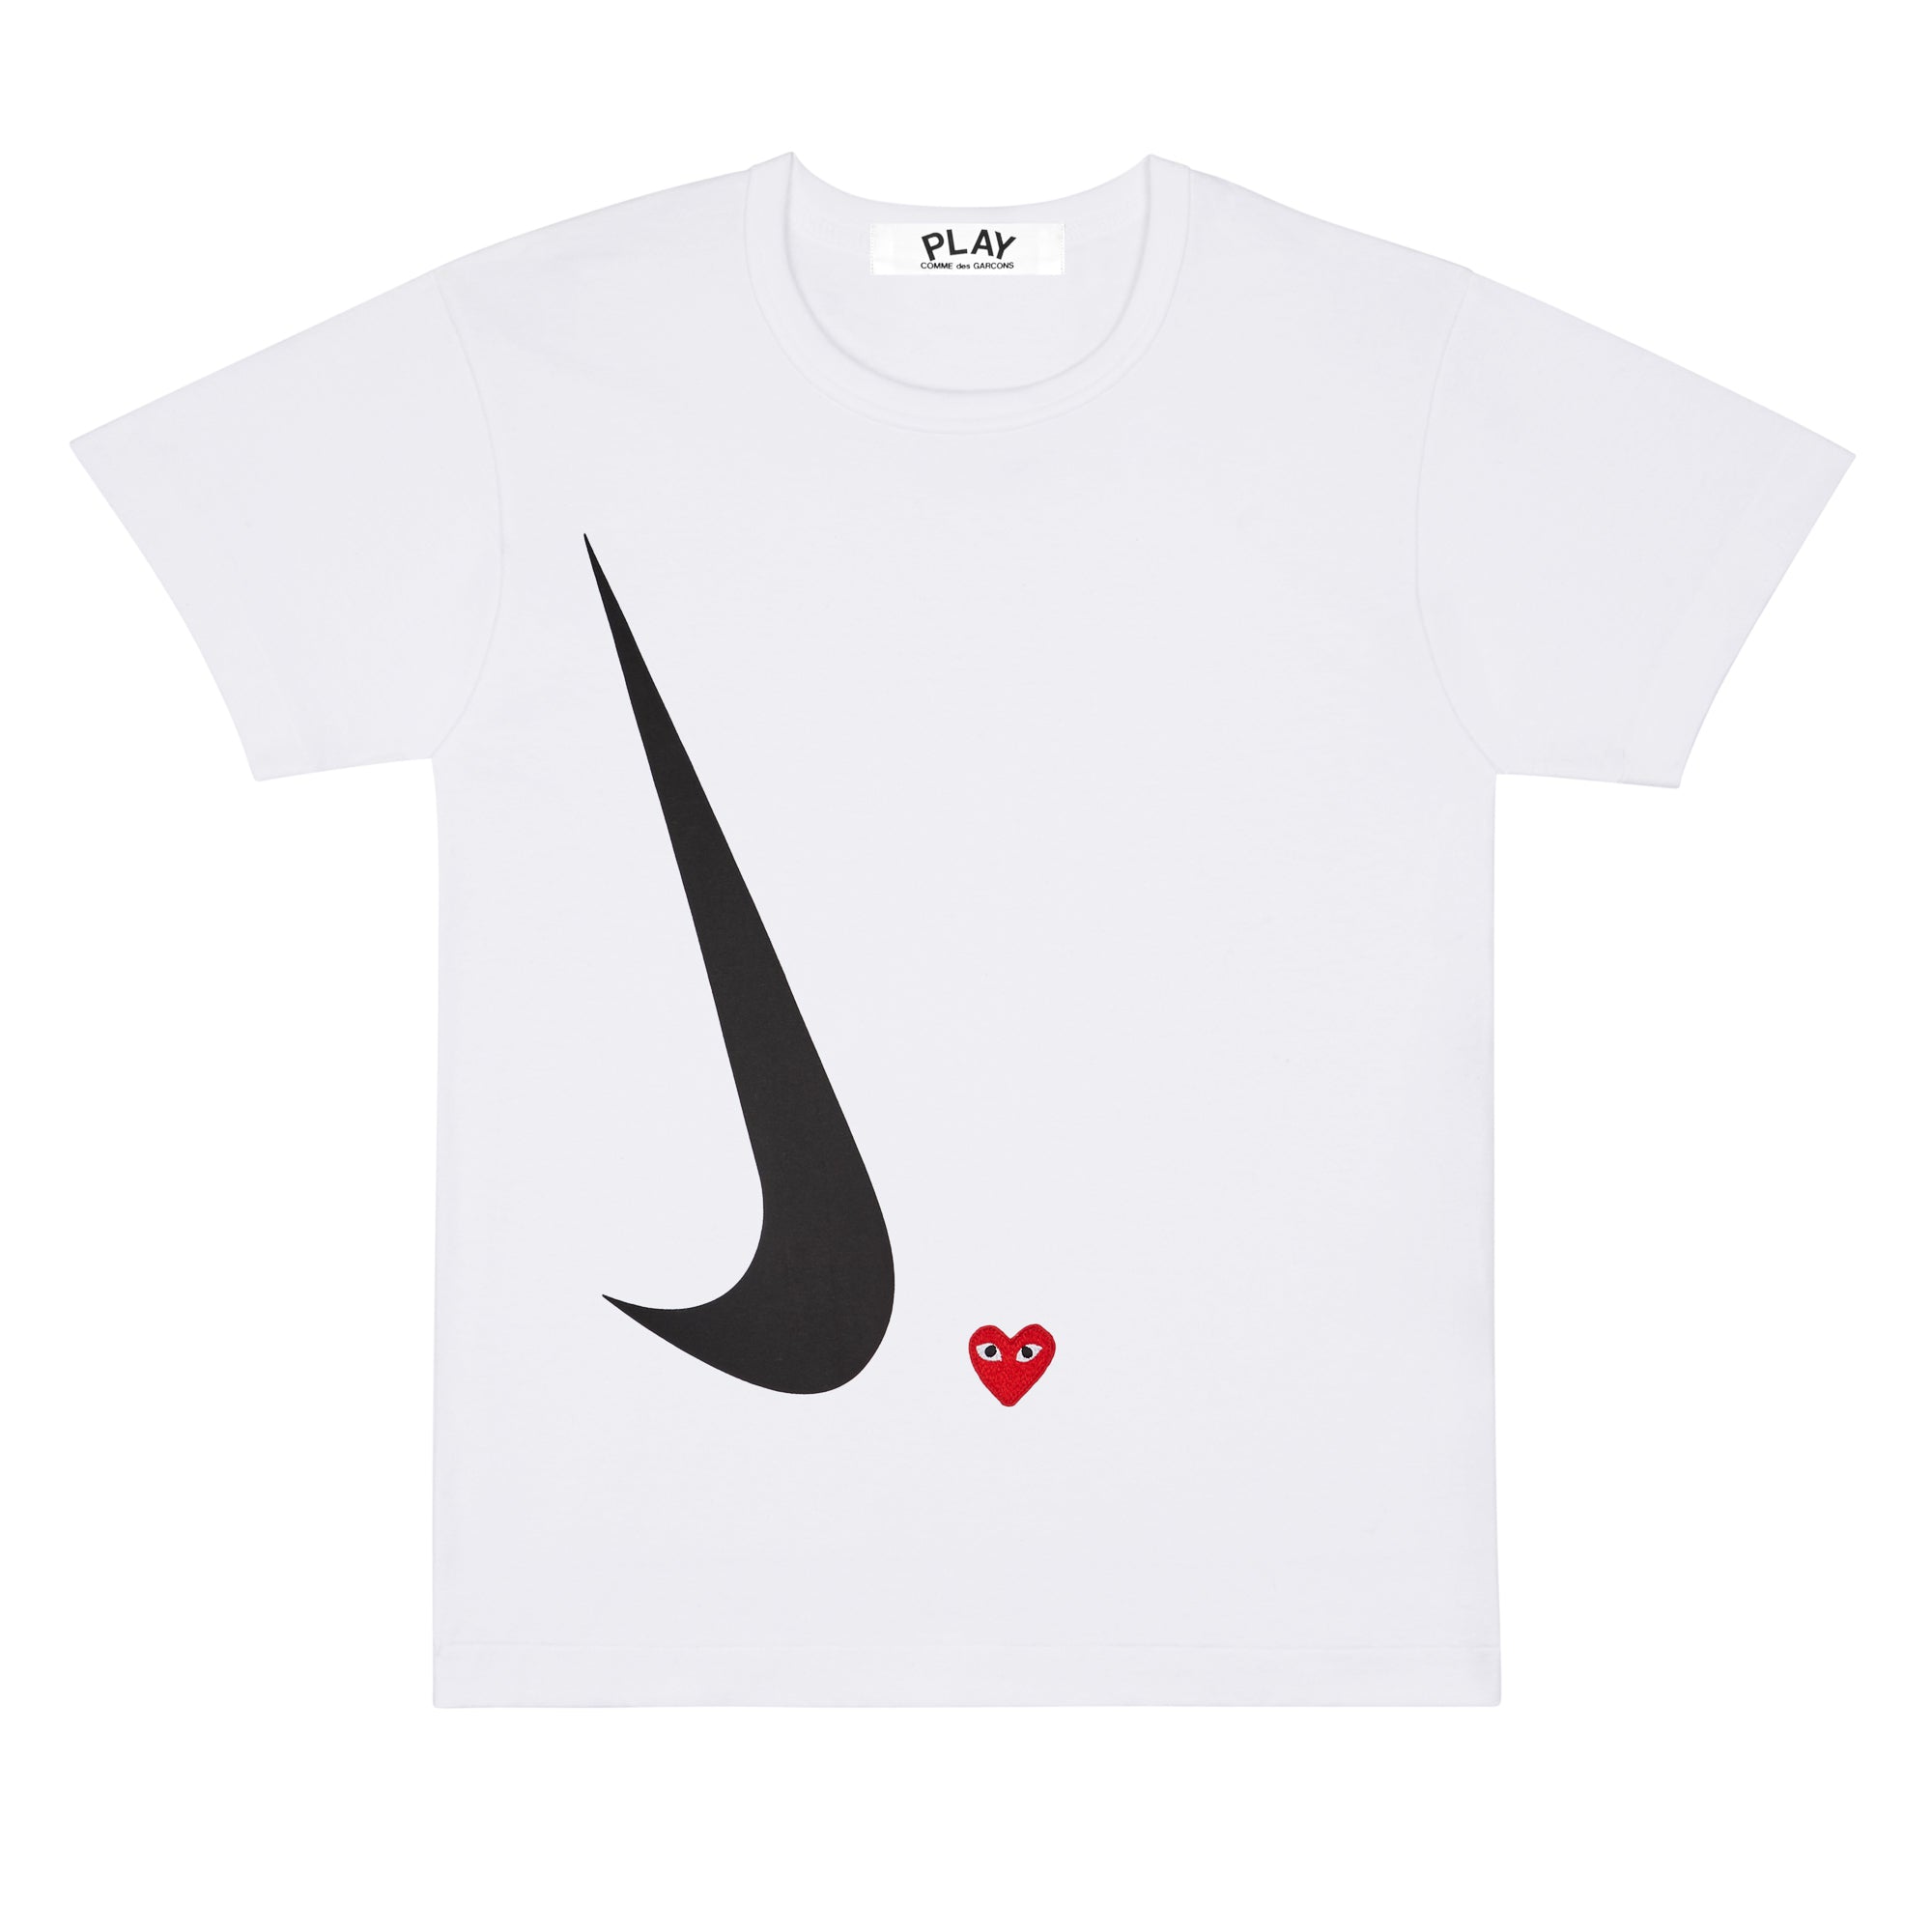 Nike - PLAY T-Shirt - (White)